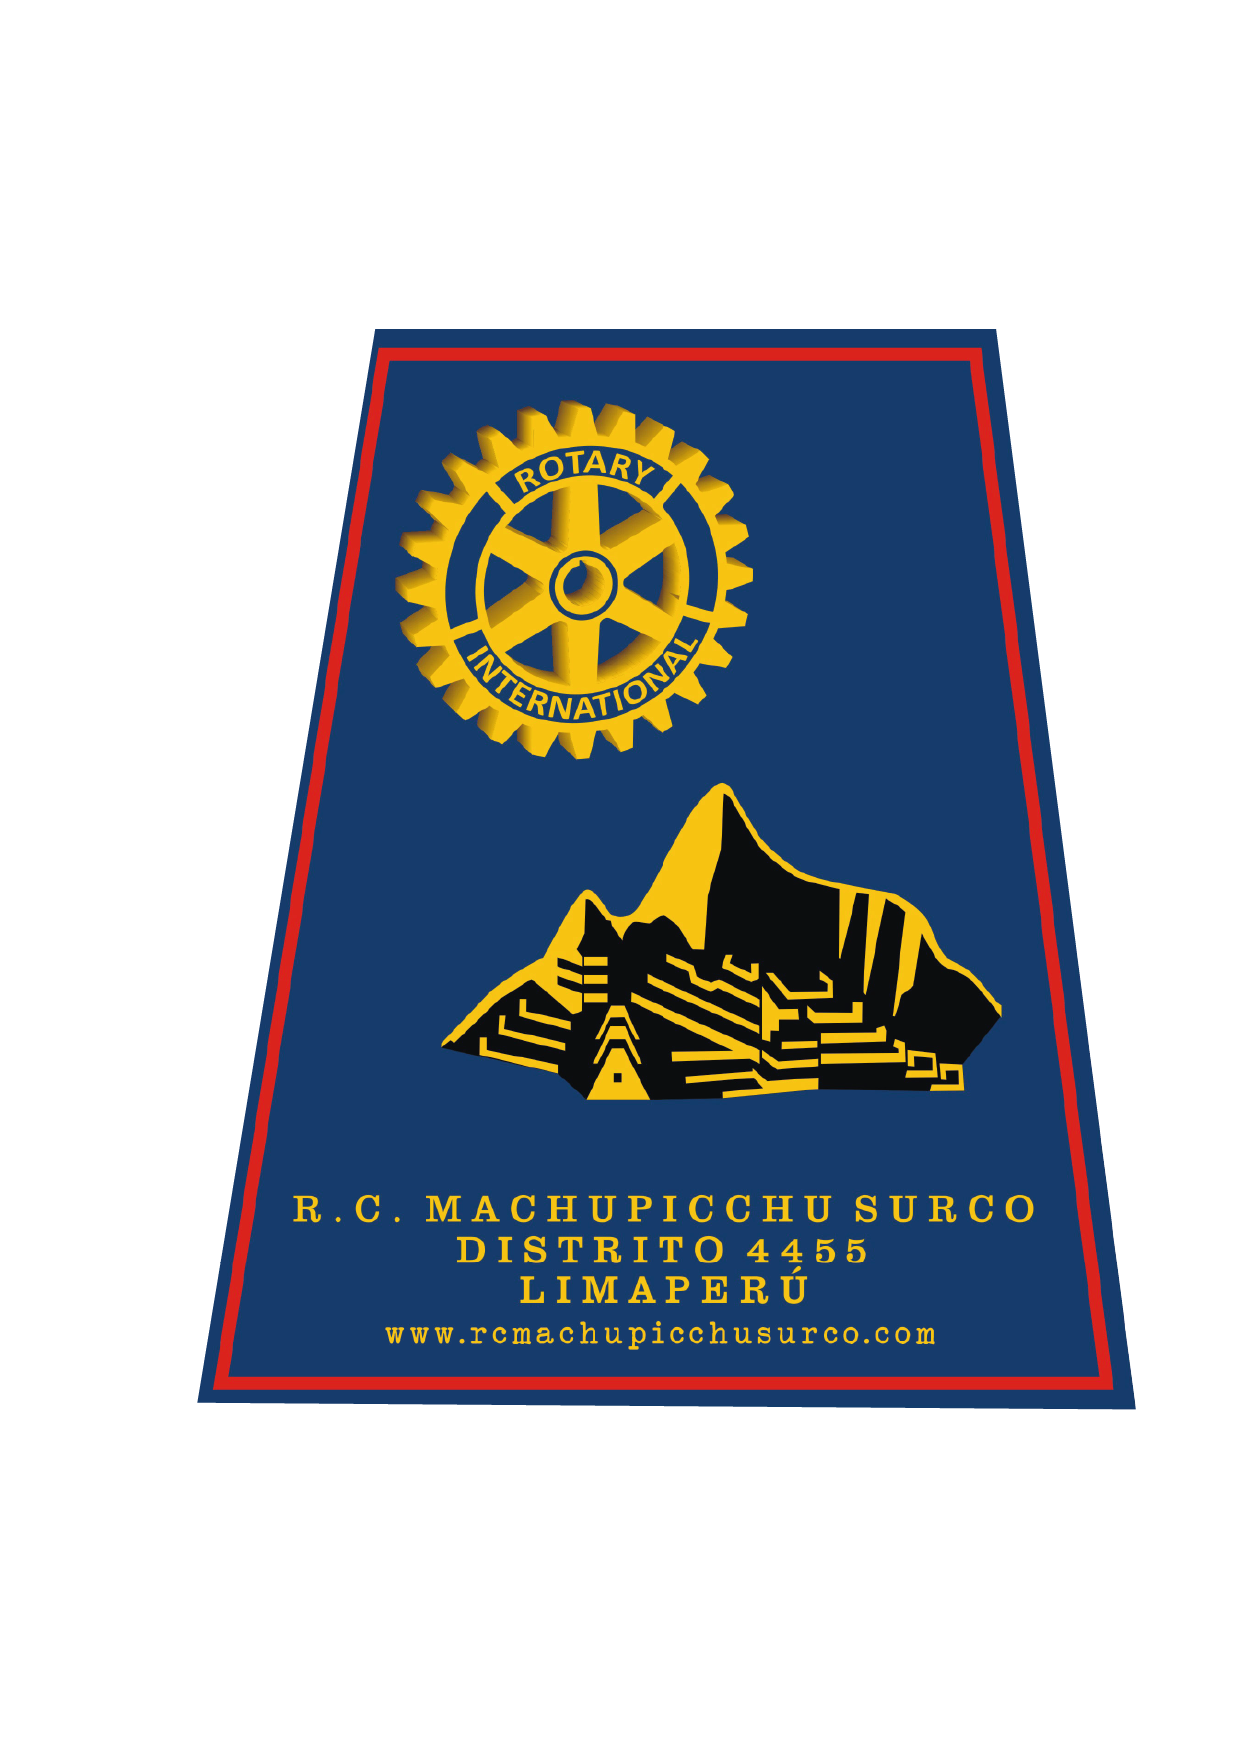 Rotary Machupicchu Surco